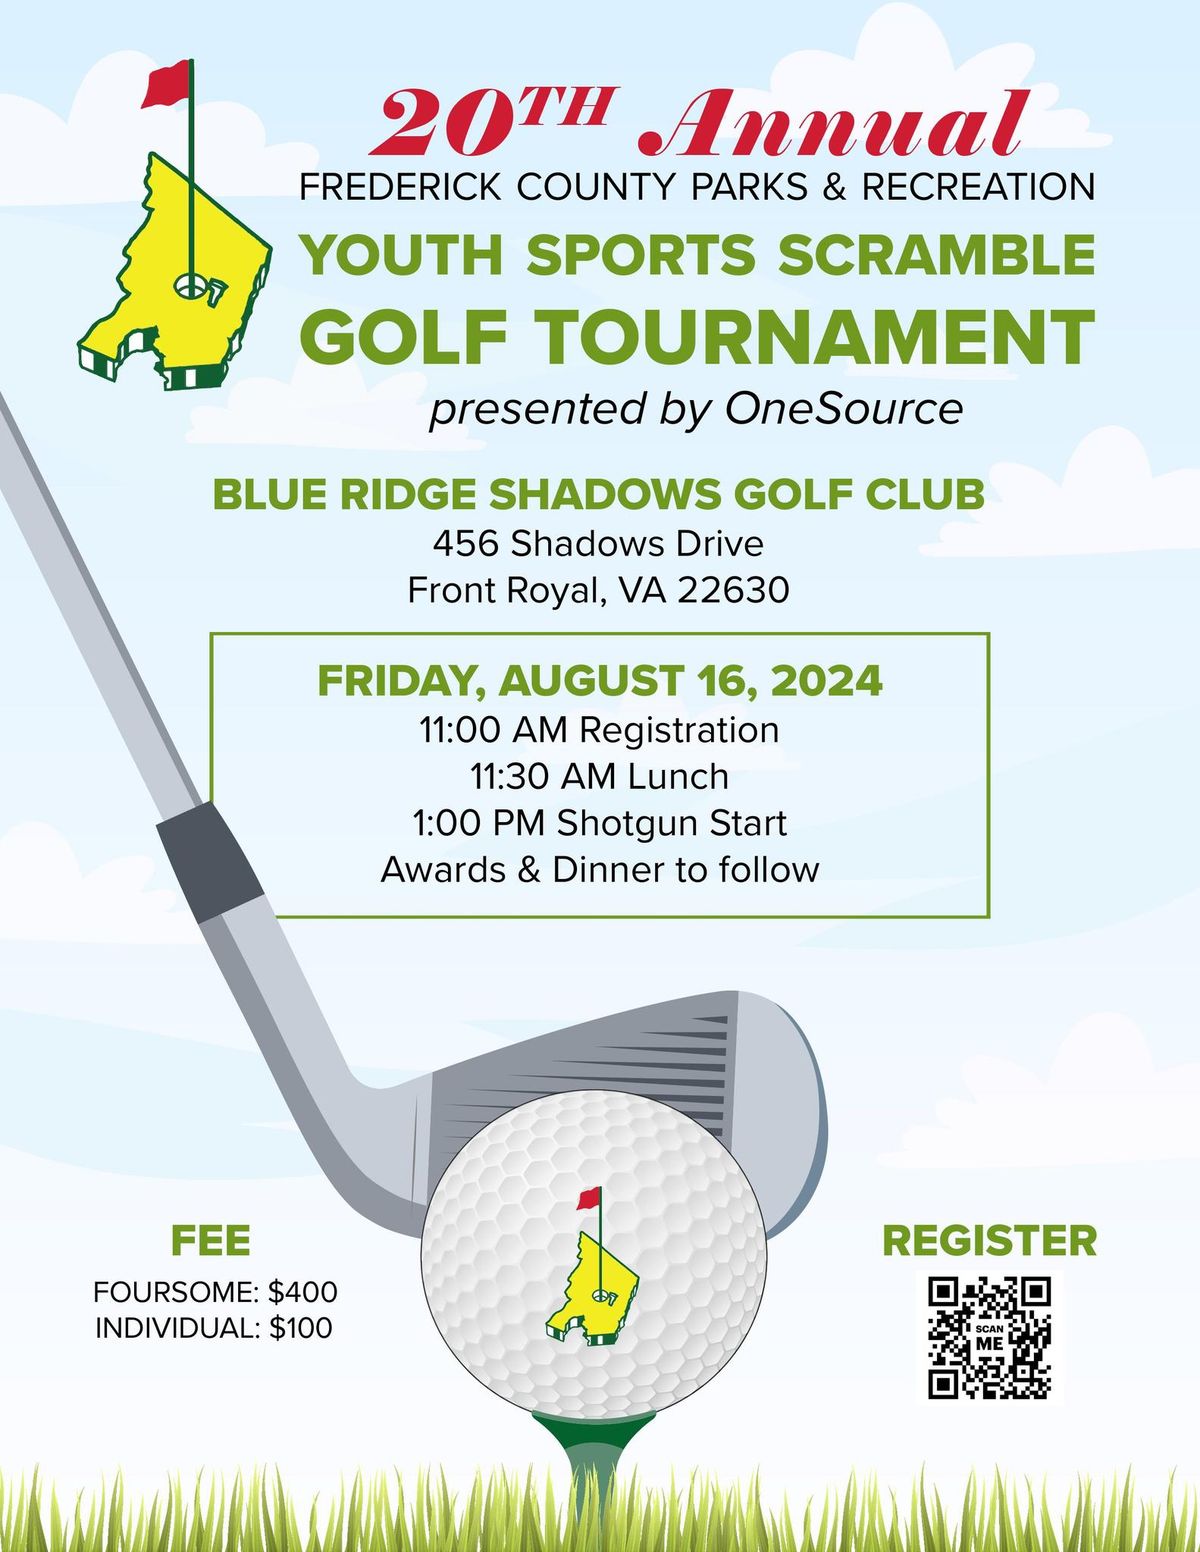 20th Annual Youth Sports Scramble Golf Tournament